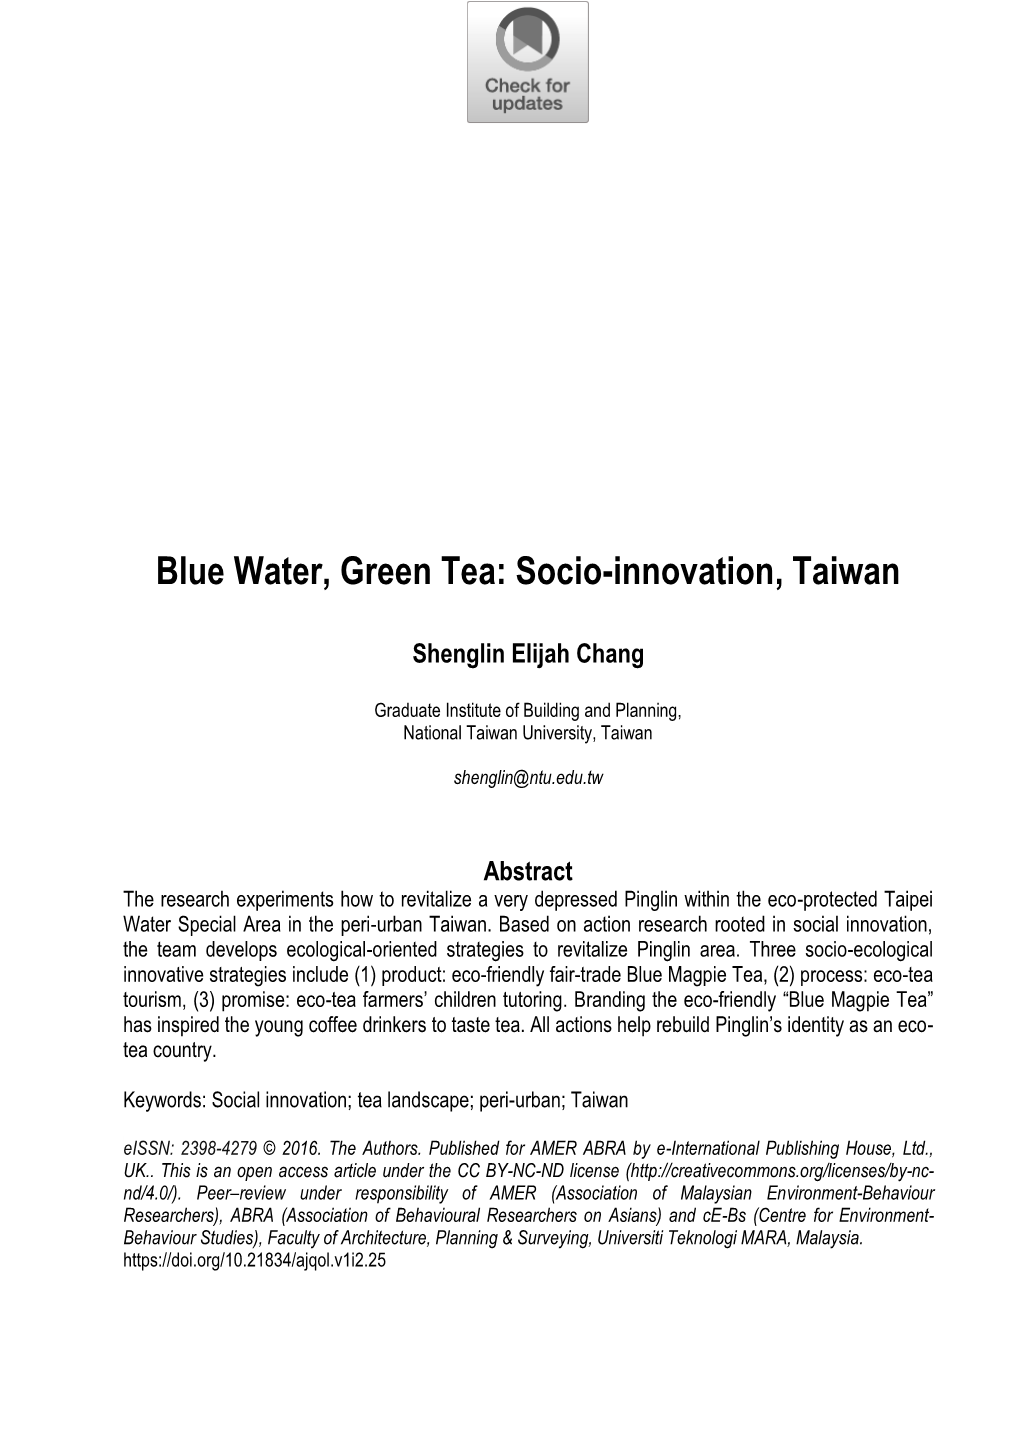 Blue Water, Green Tea: Socio-Innovation, Taiwan